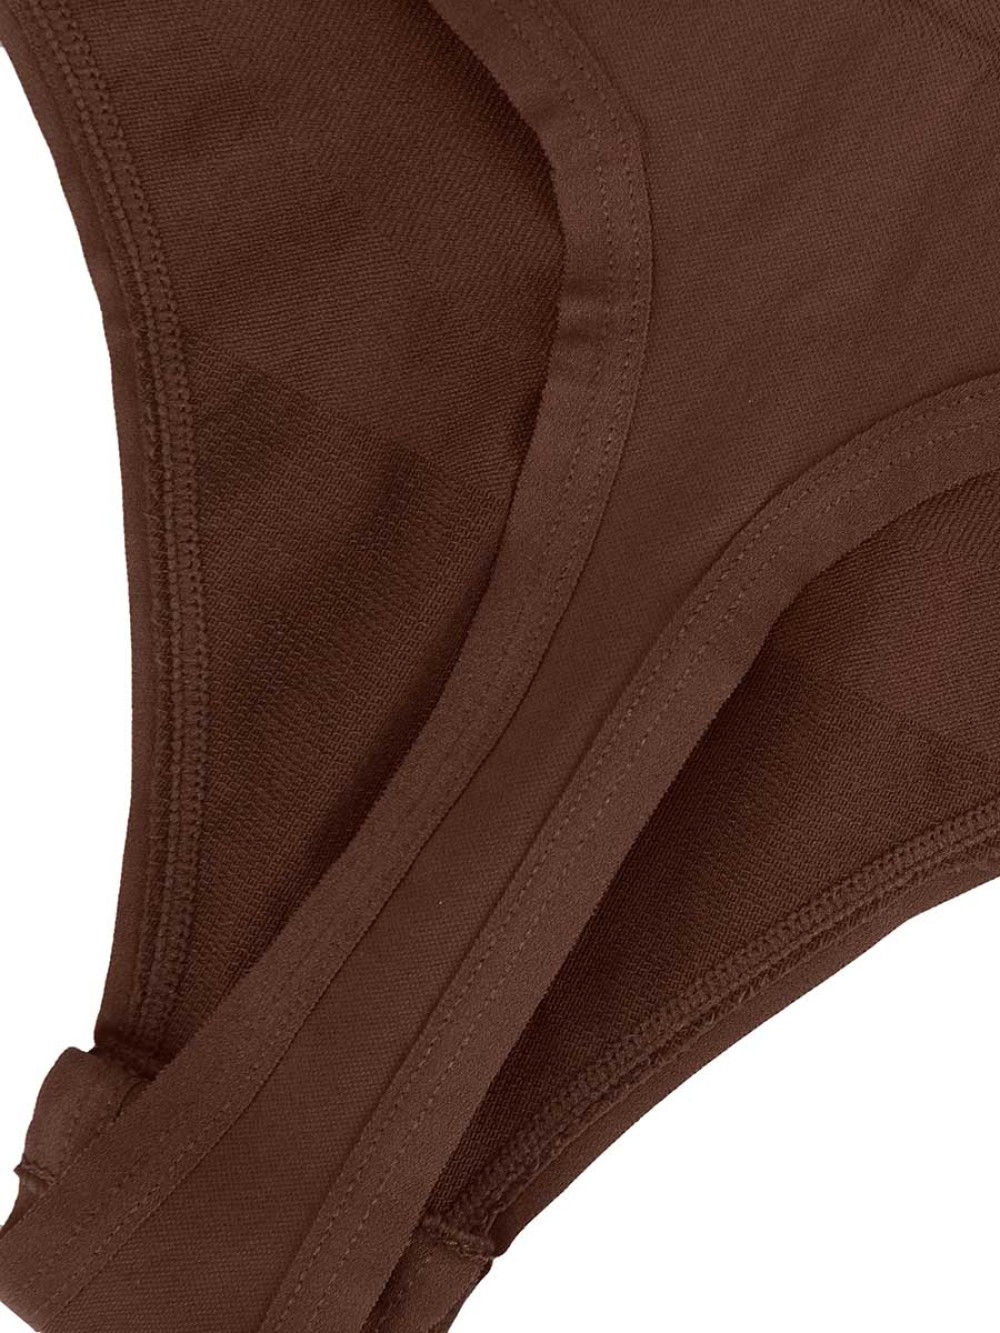 Thong Tummy Control Seamless Shapewear Bodysuit For Women